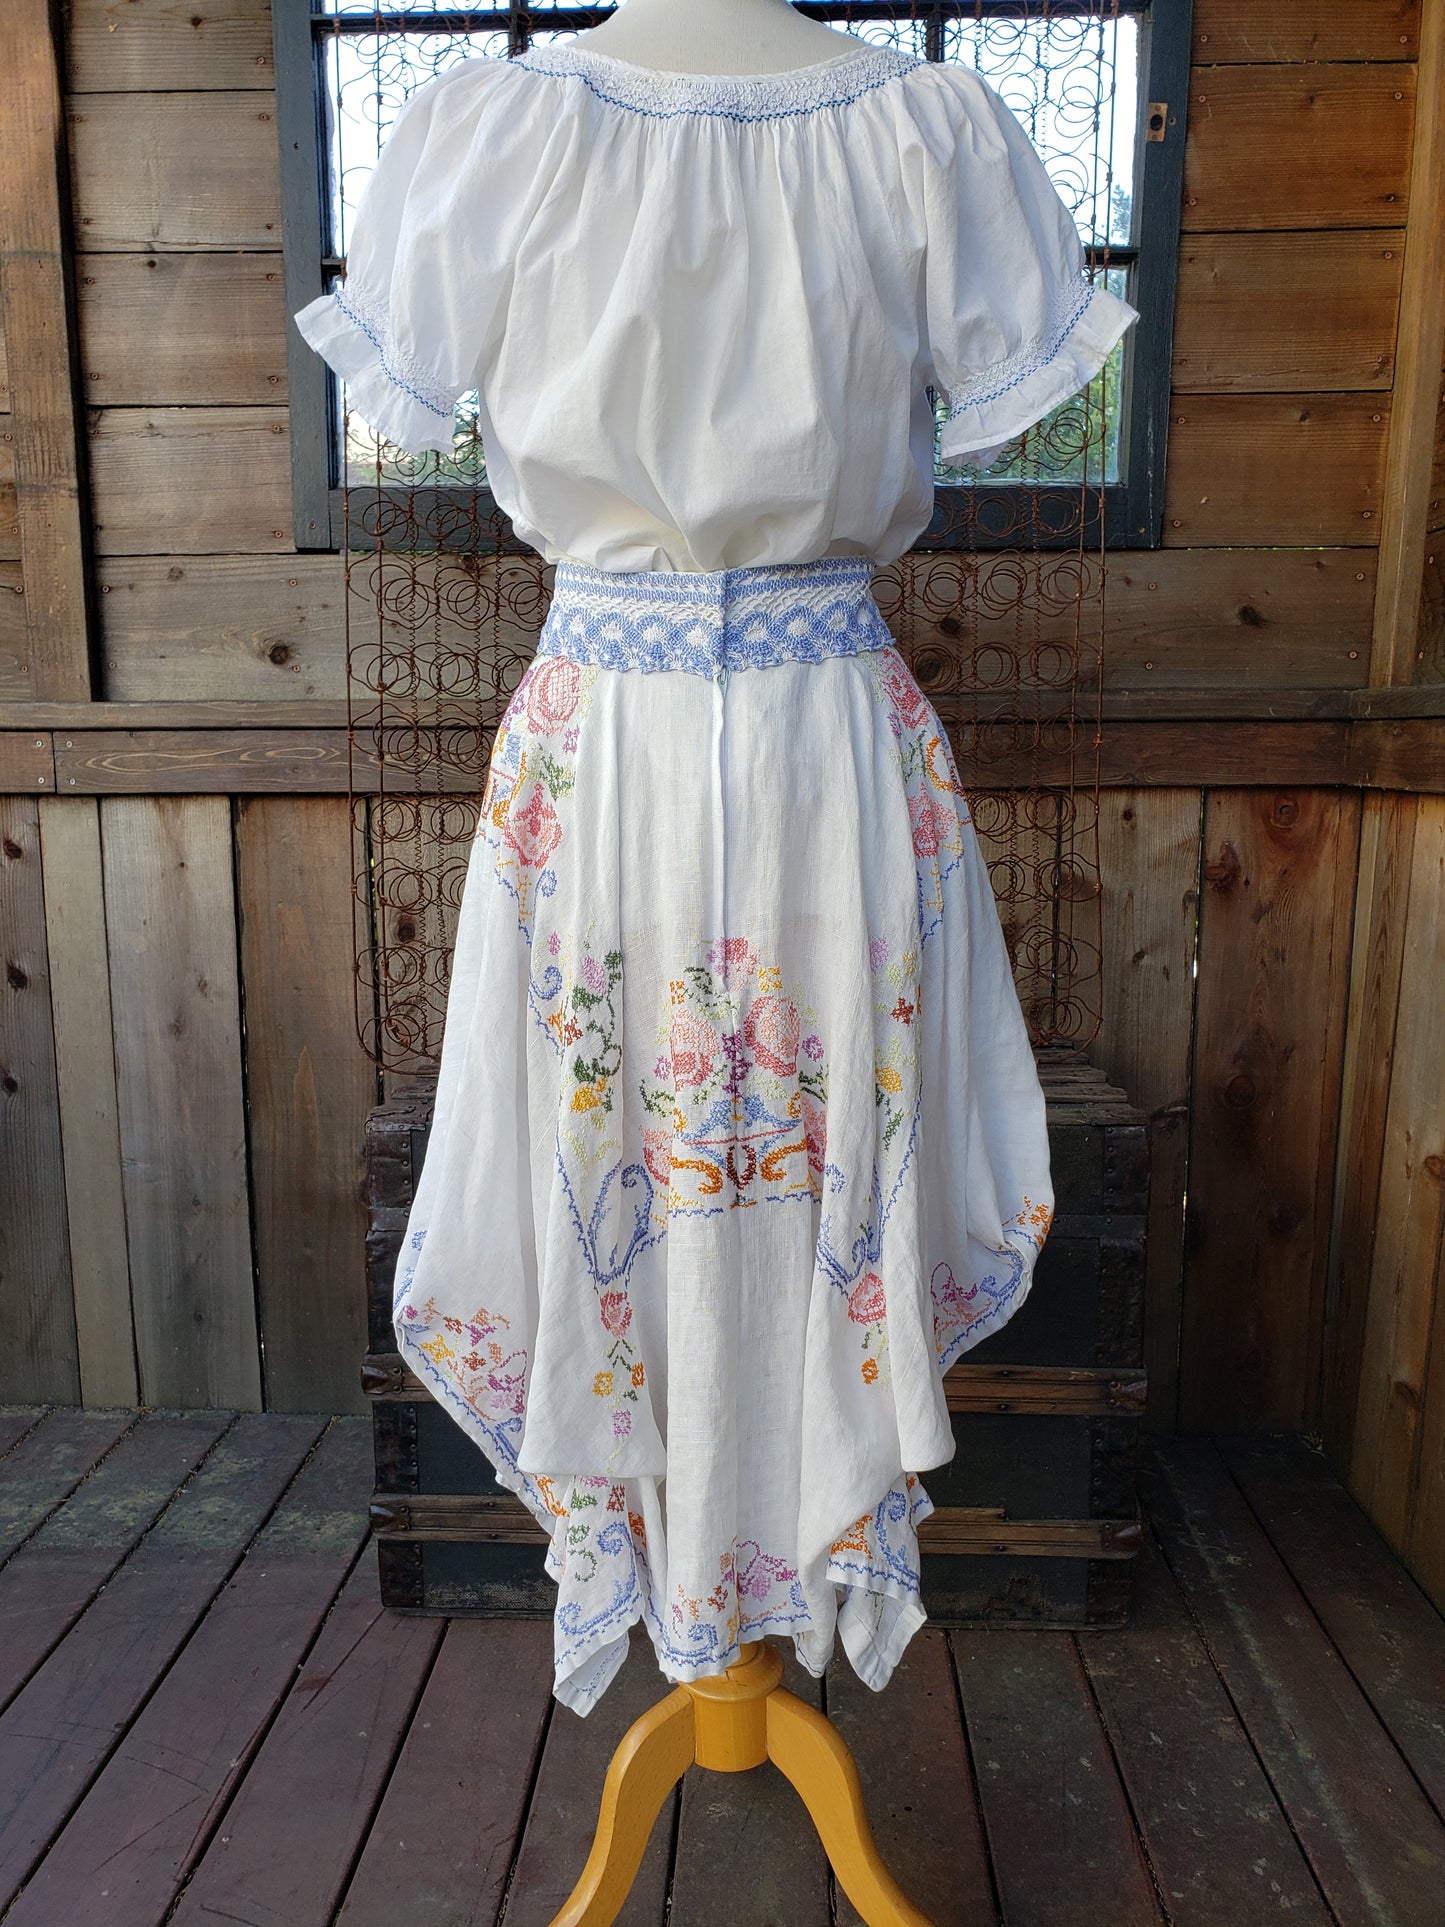 Vintage embroidered skirt